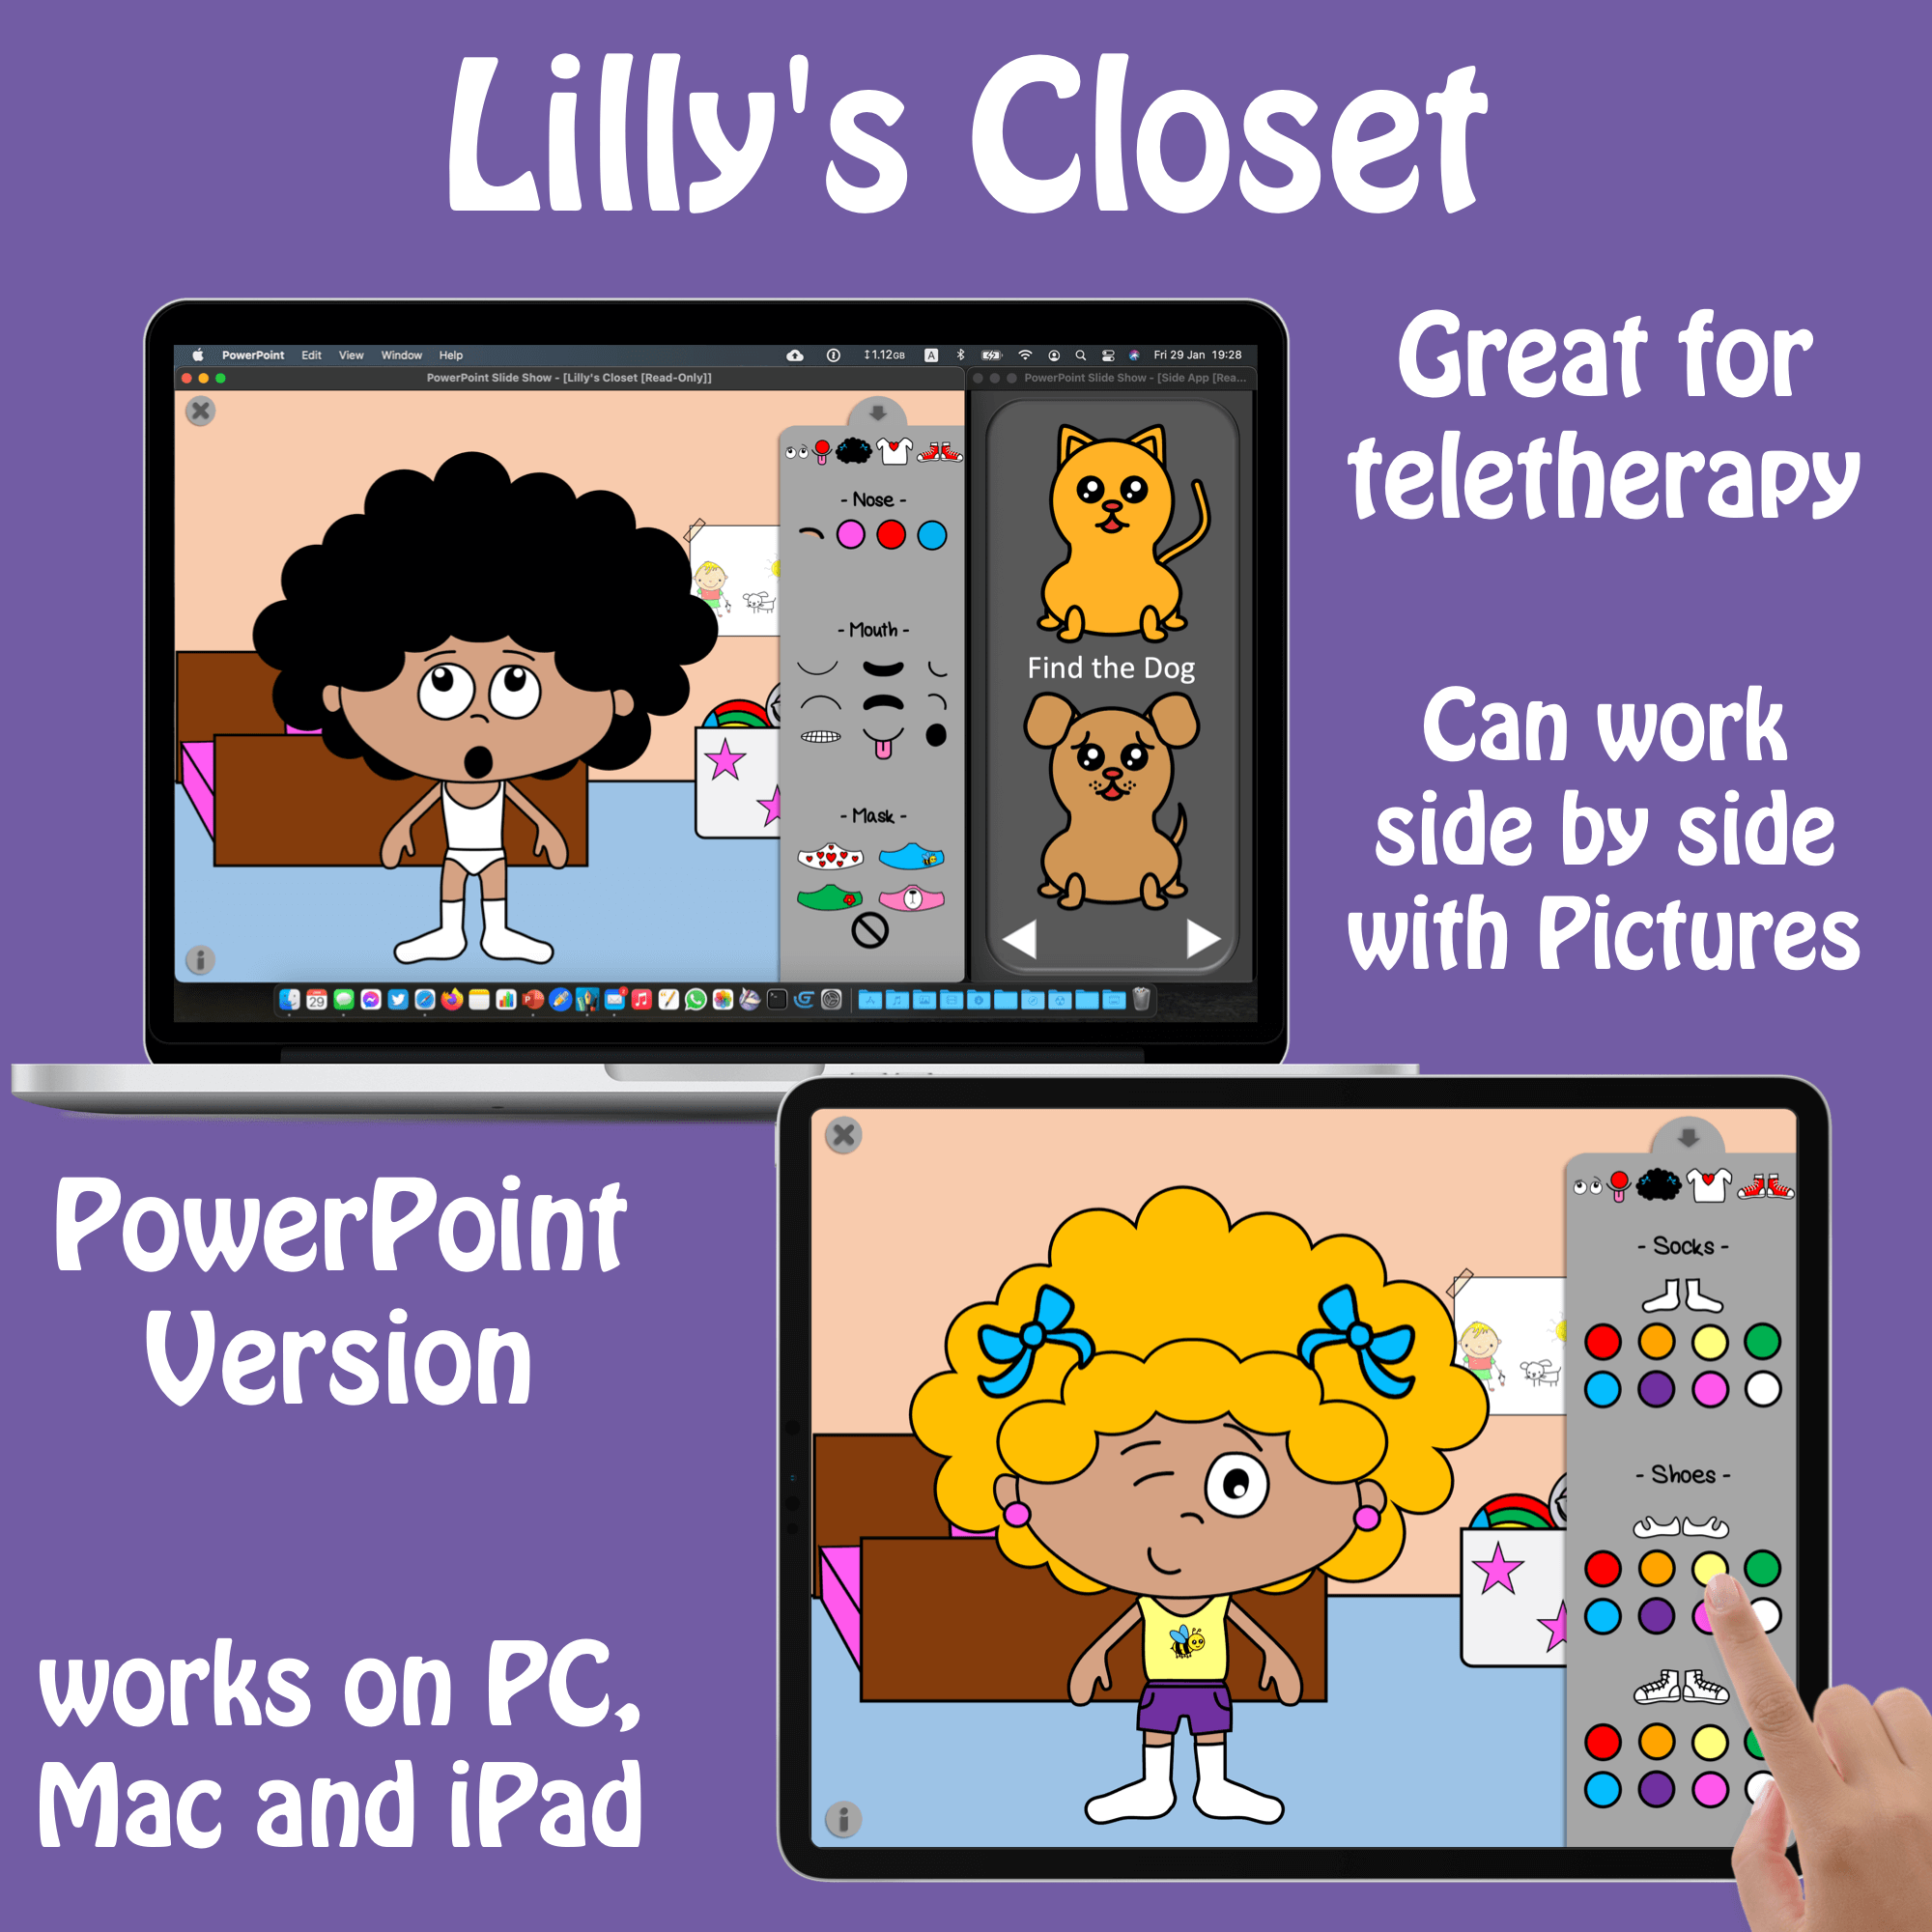 Lilly’s Closet